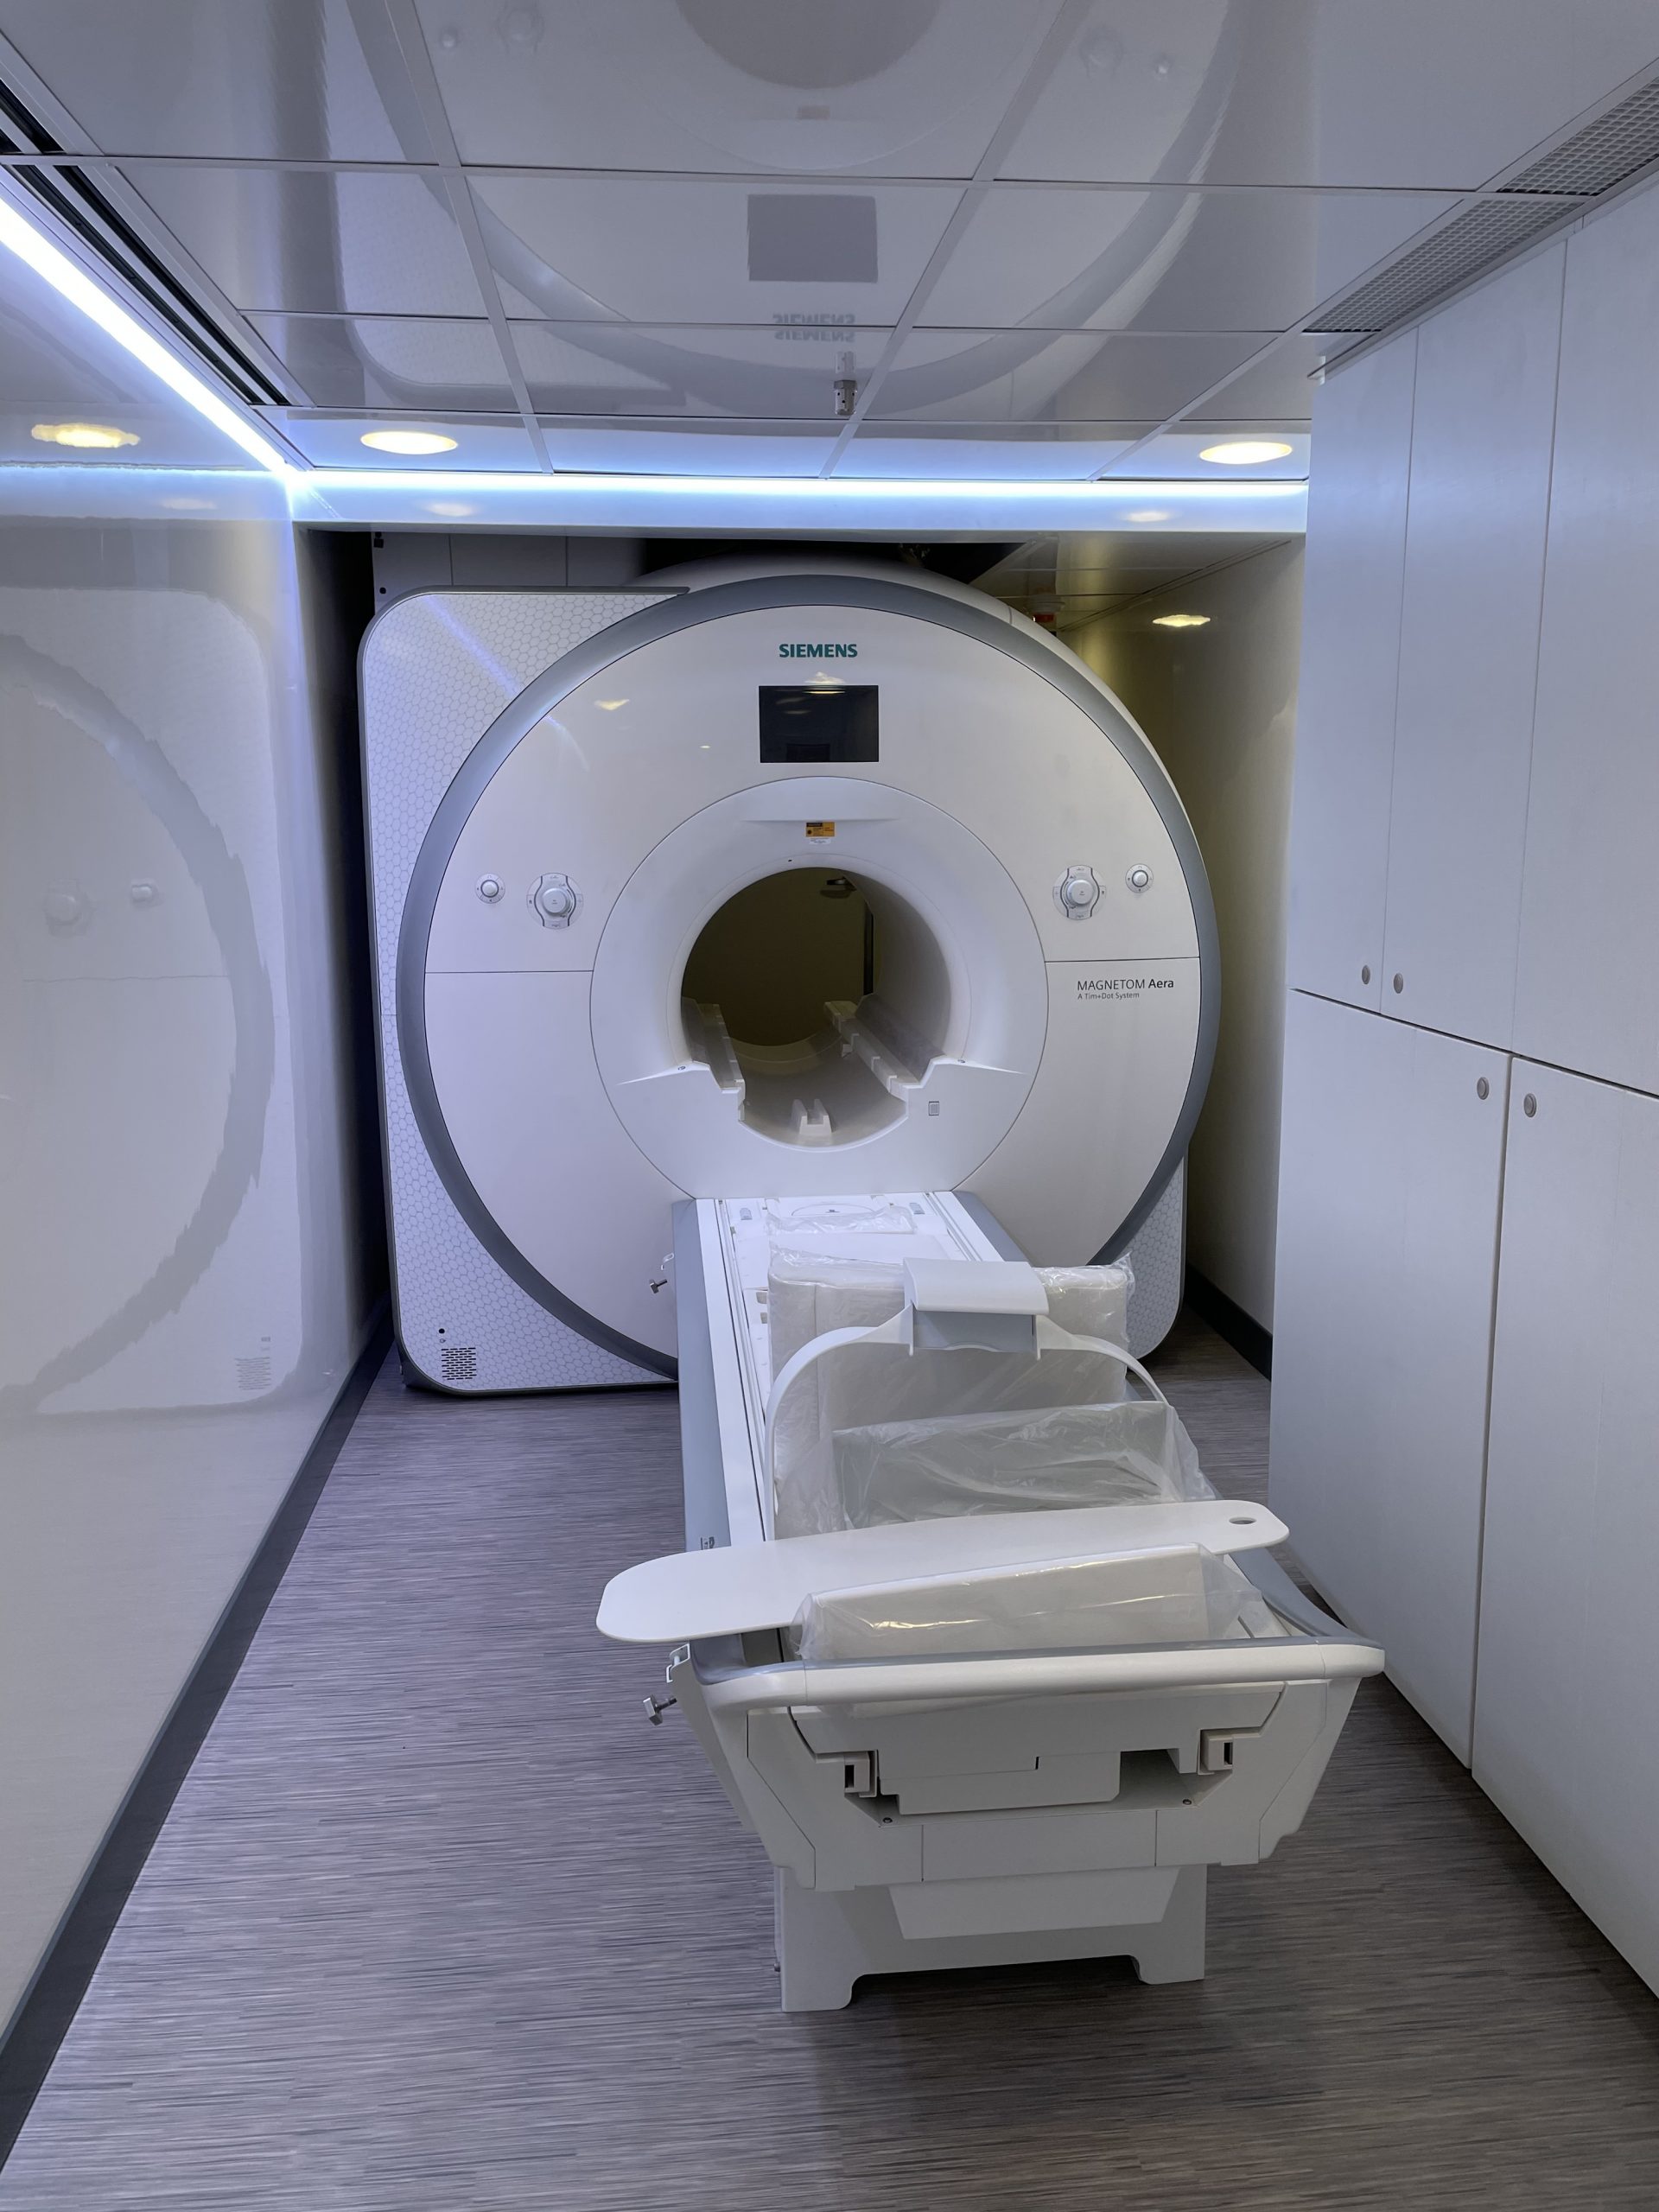 Siemens AERA 1.5T Mobile MRI Trailer